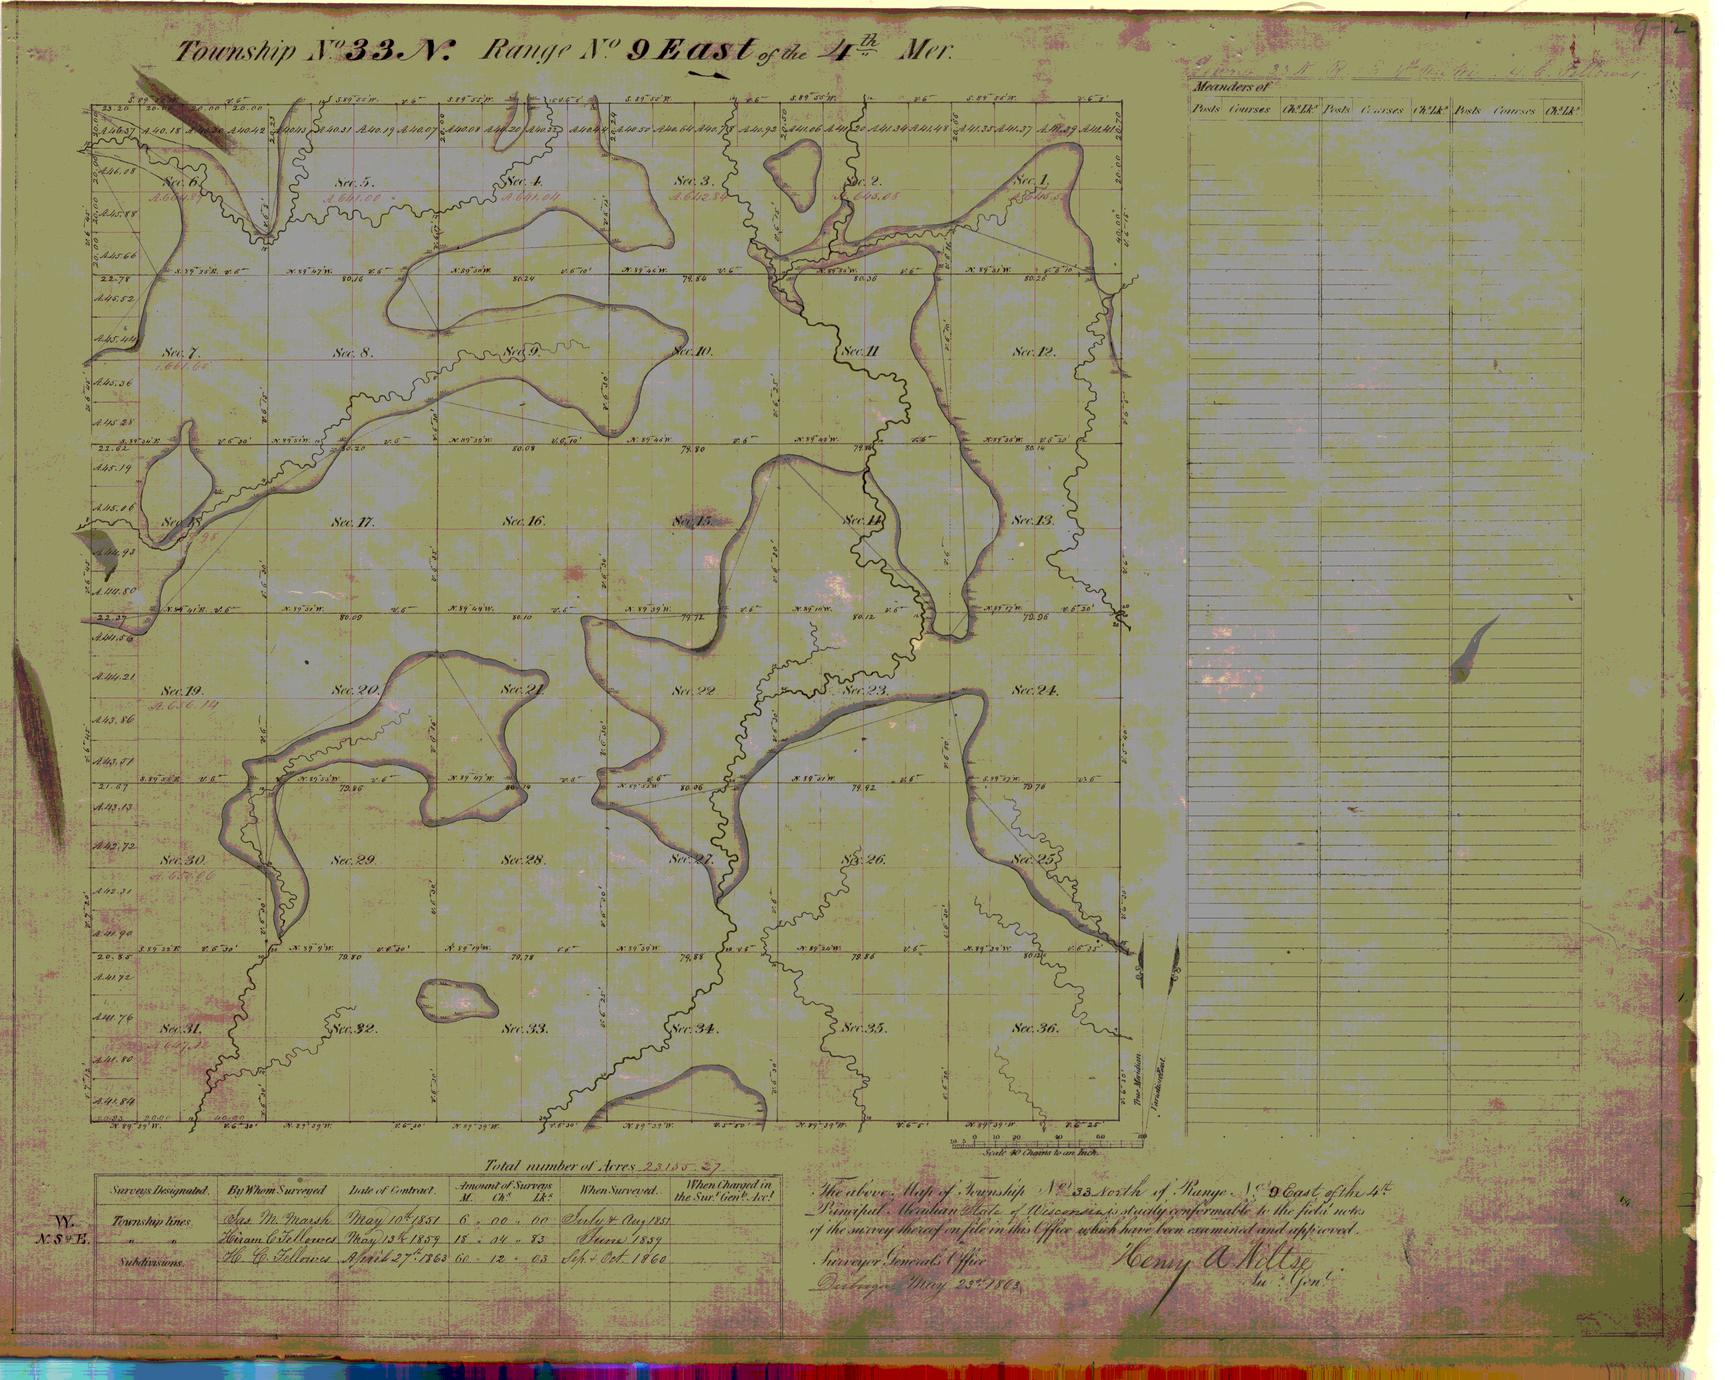 [Public Land Survey System map: Wisconsin Township 33 North, Range 09 East]